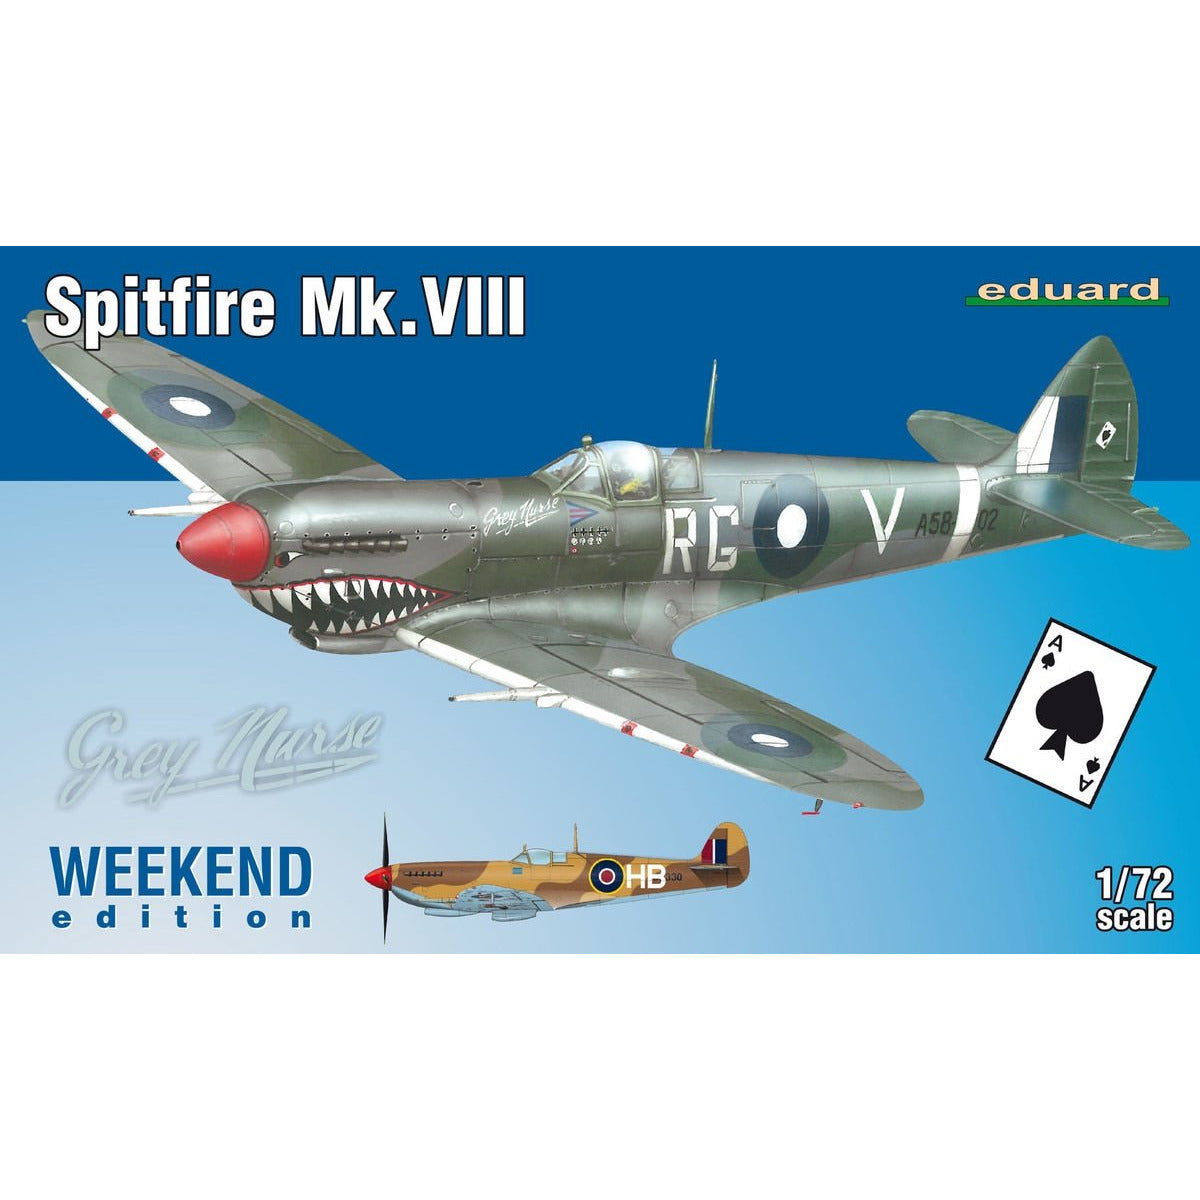 Spitfire  Mk VIII (Weekend Edition) 1/72 by Eduard